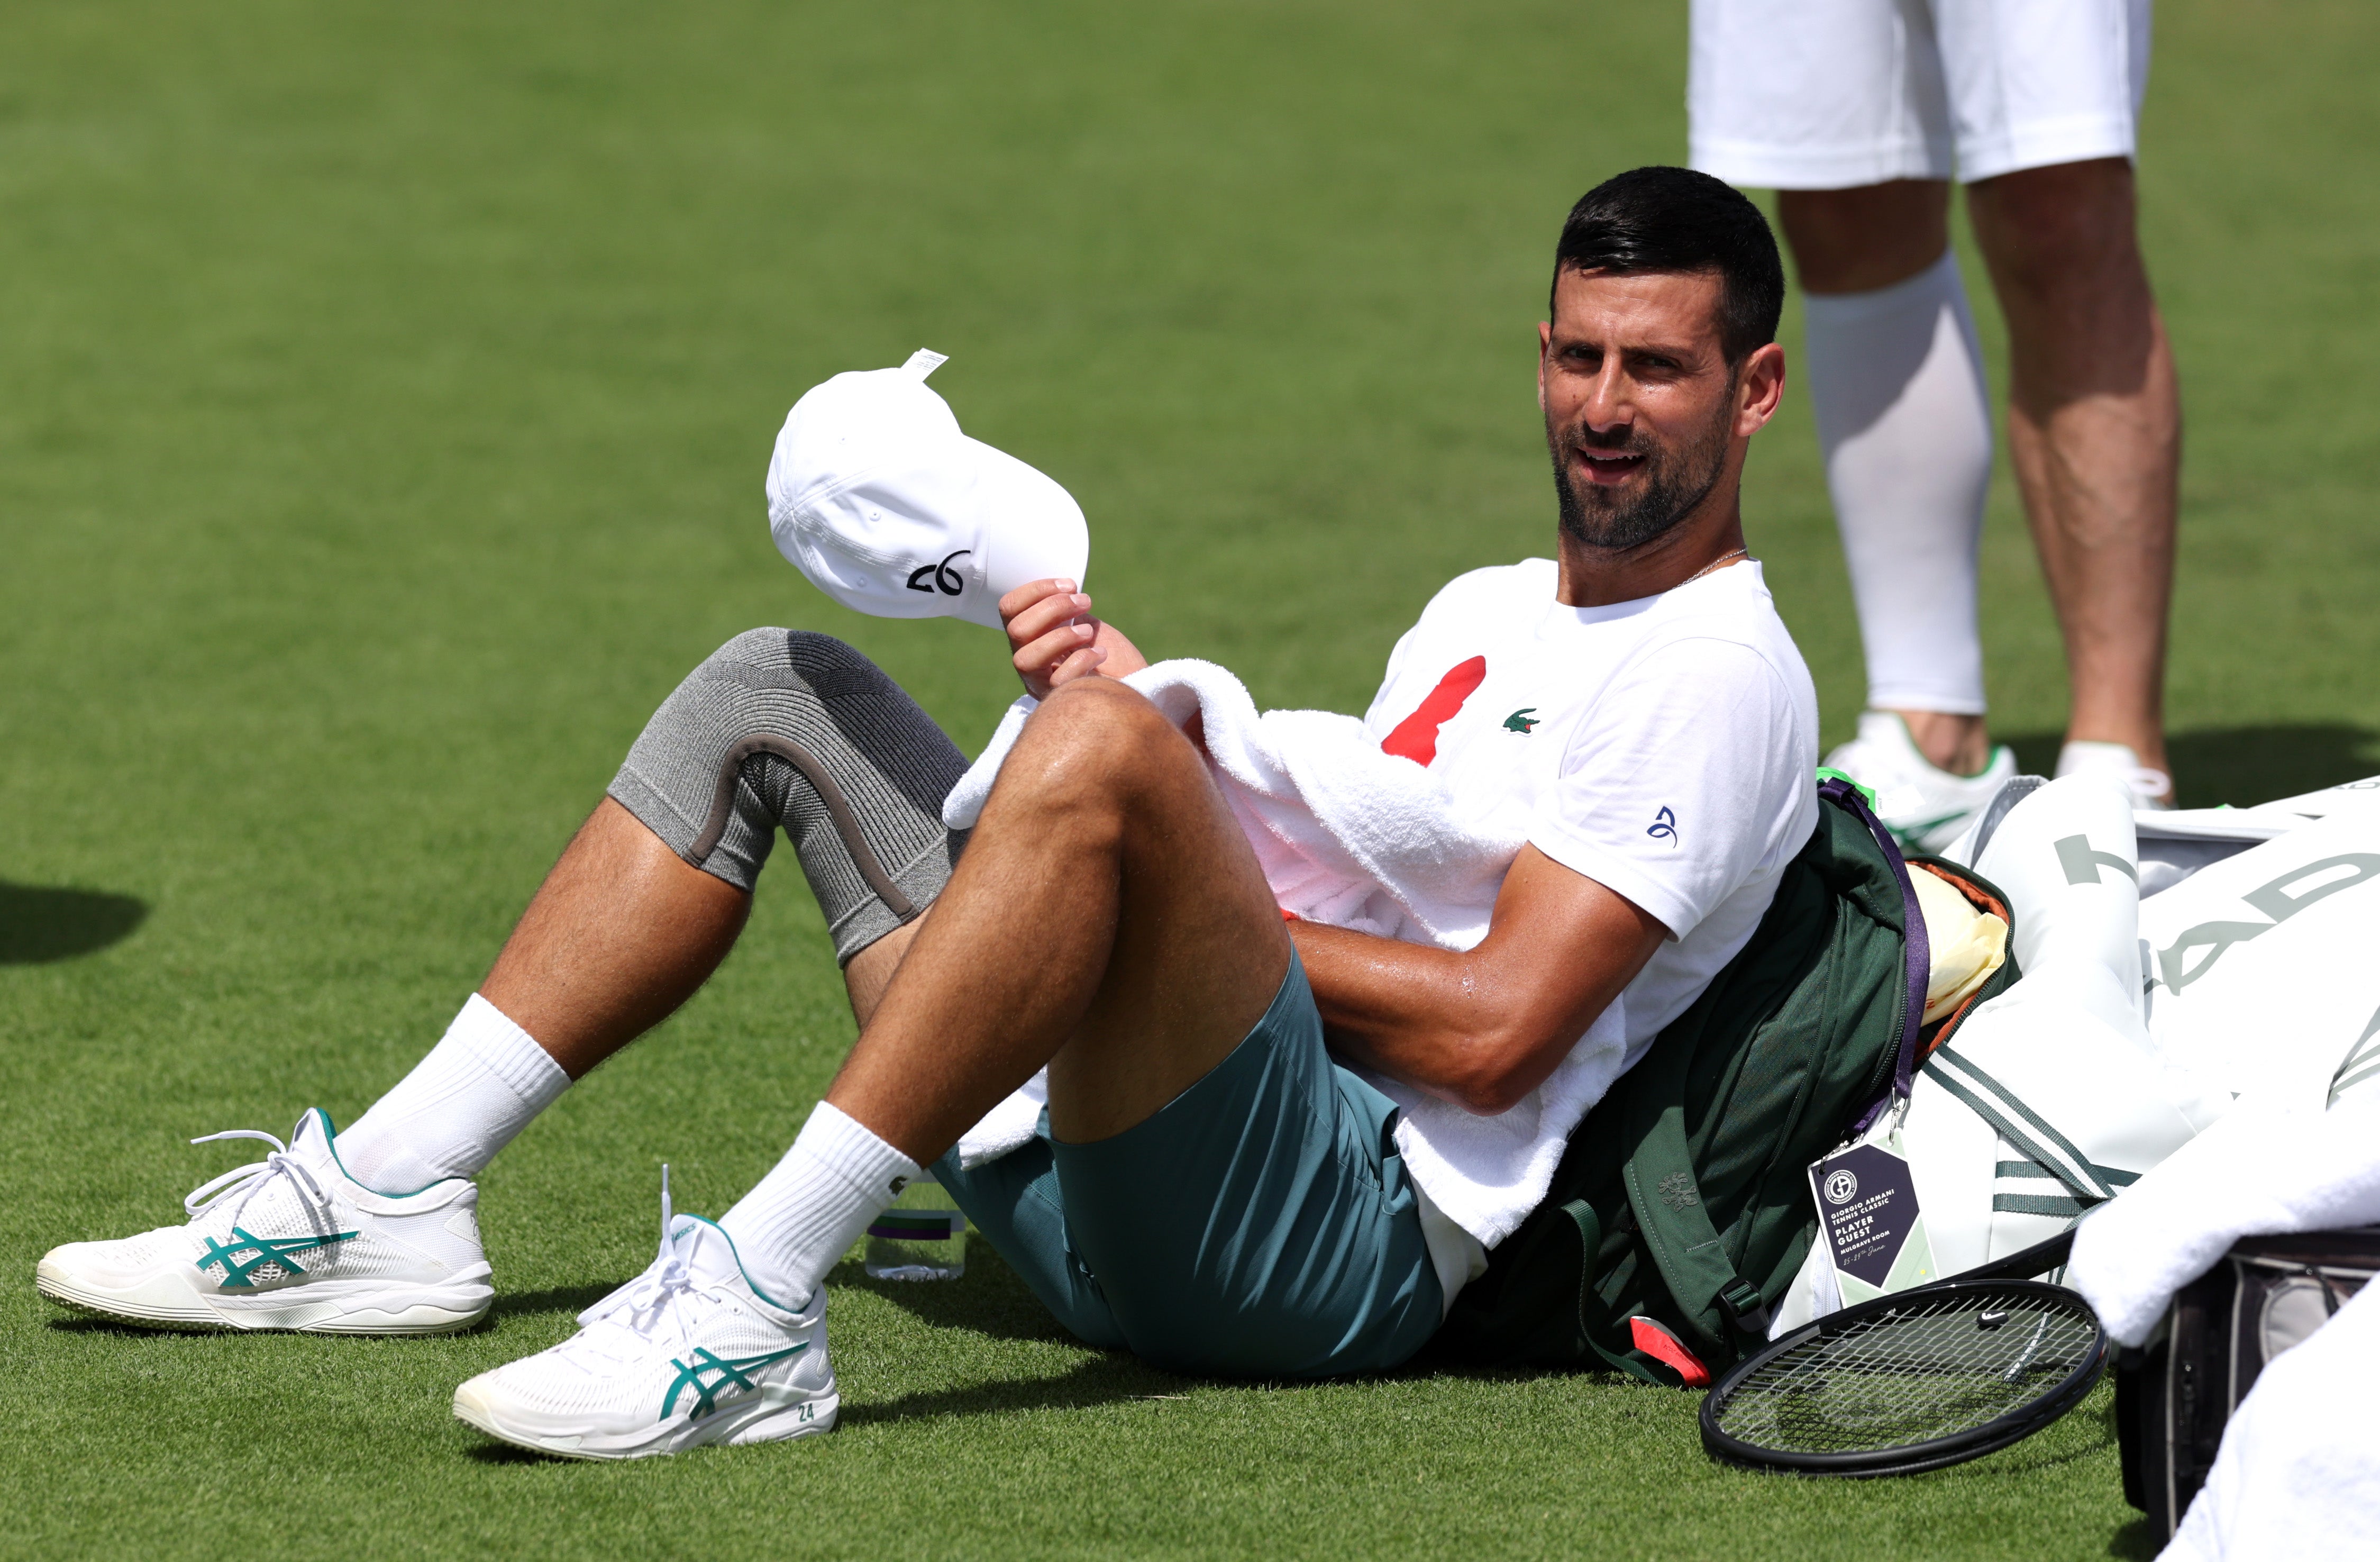 Novak Djokovic takes a break during practice at Wimbledon